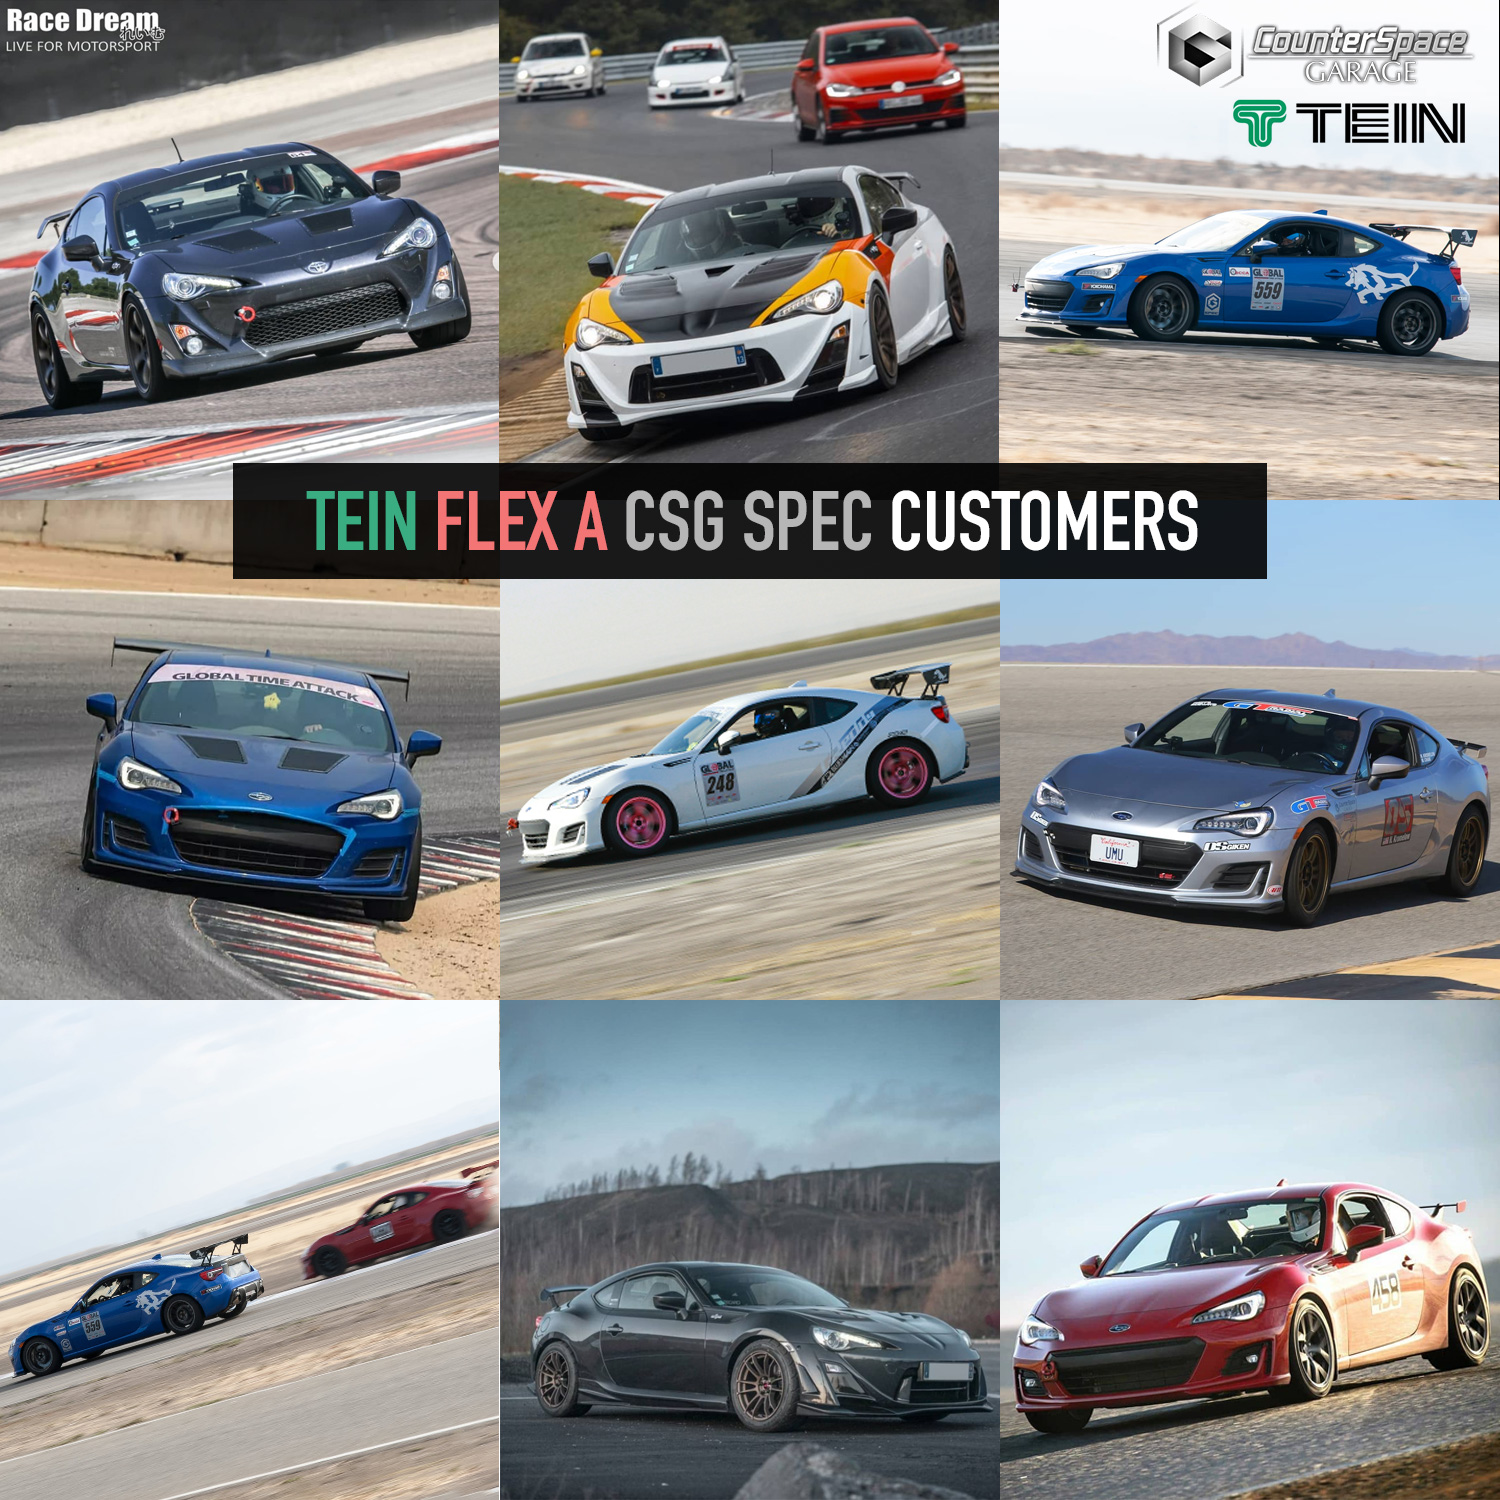 Tein Flex A CSG Spec coil-overs for Toyota 86, Subaru BRZ. Customer Shots